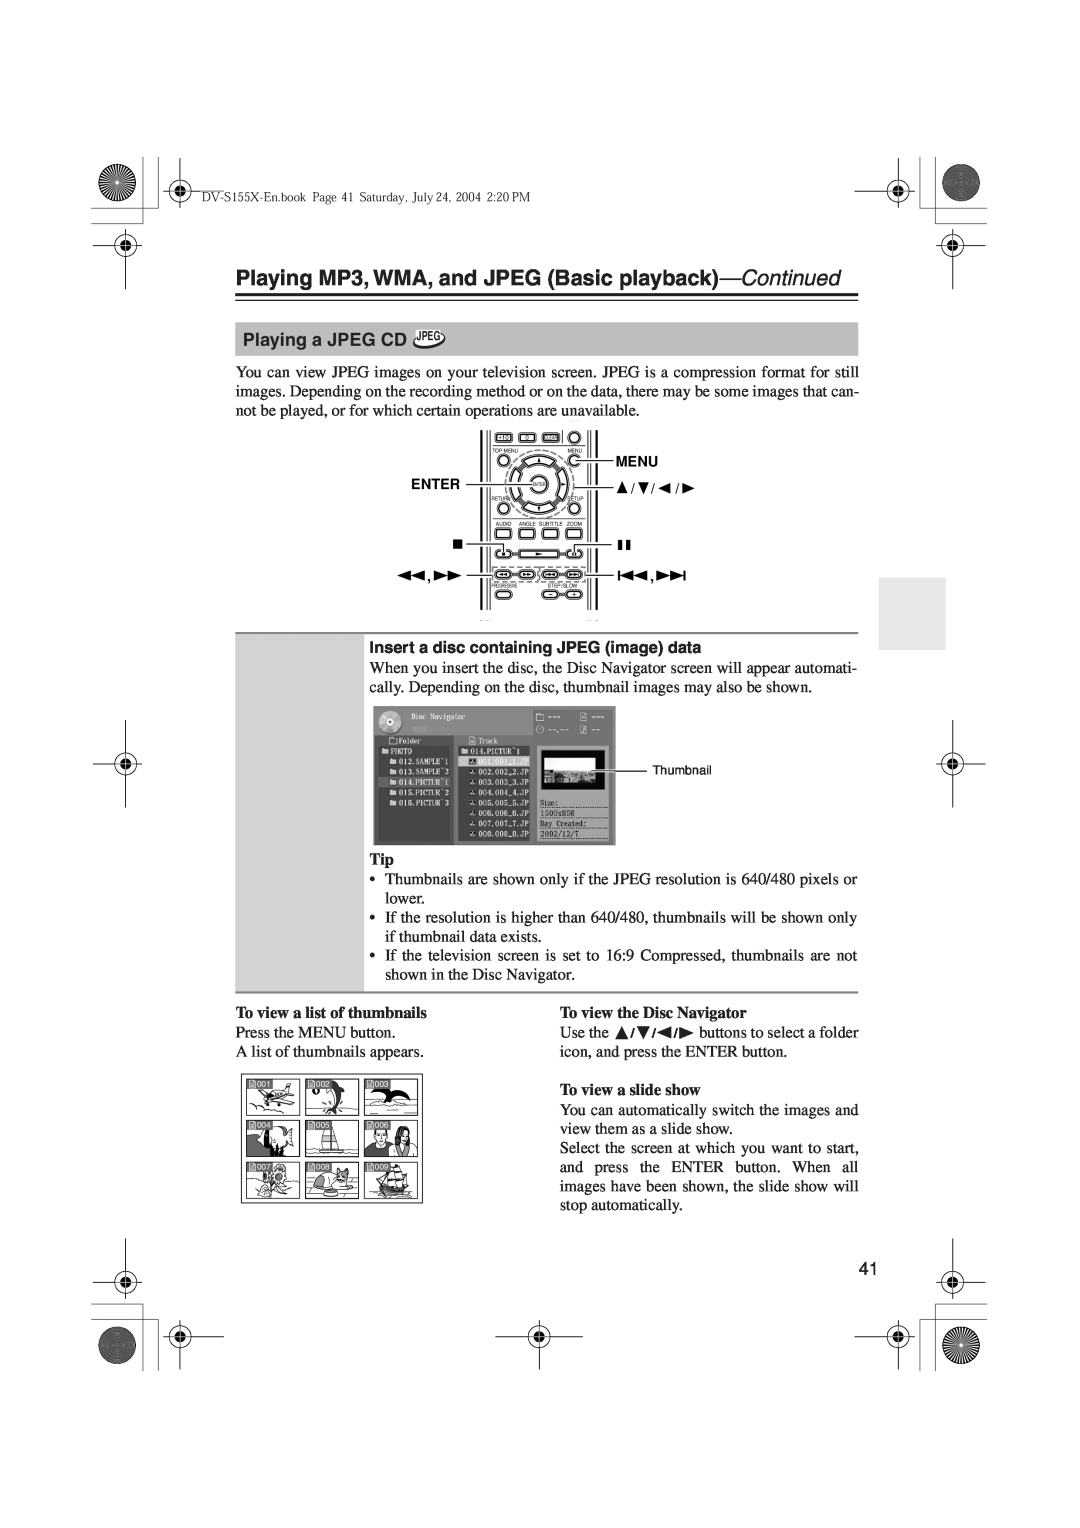 Onkyo HTP-V10X, PR-155X Playing a JPEG CD JPEG, Insert a disc containing JPEG image data, To view a list of thumbnails 